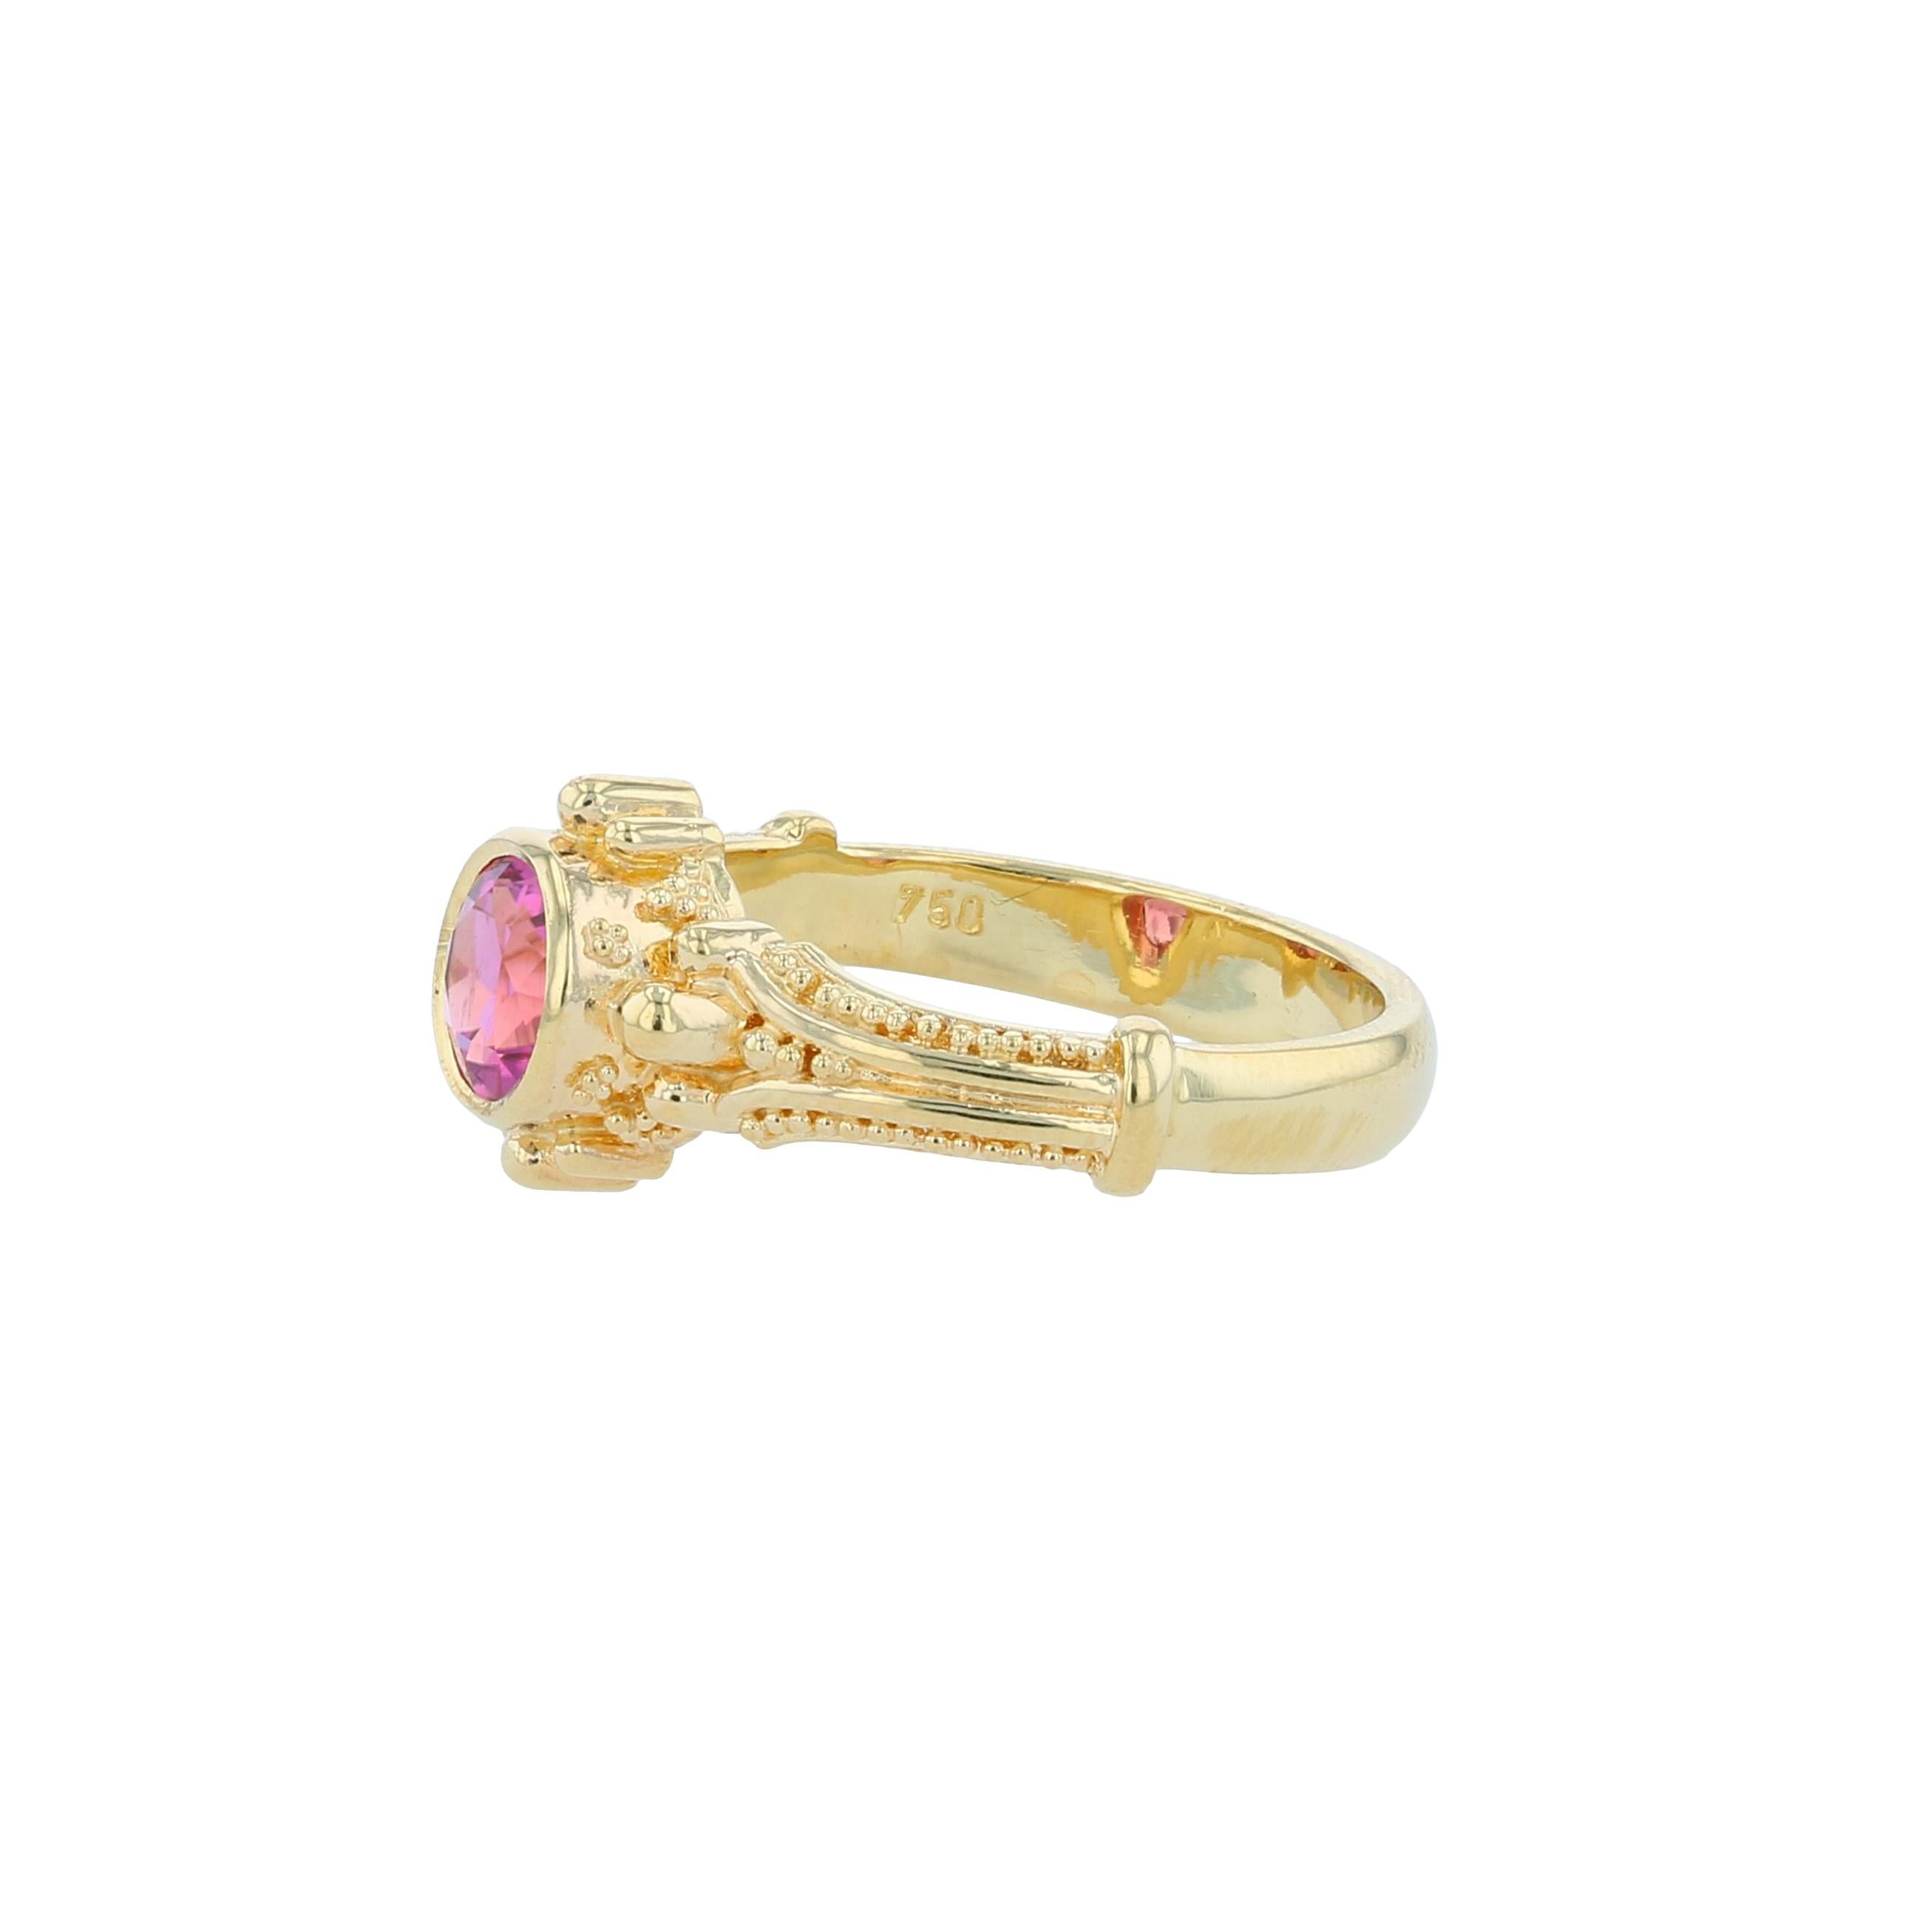 Women's or Men's Kent Raible 18 Karat Gold Pink Tourmaline Solitaire Ring with Fine Granulation